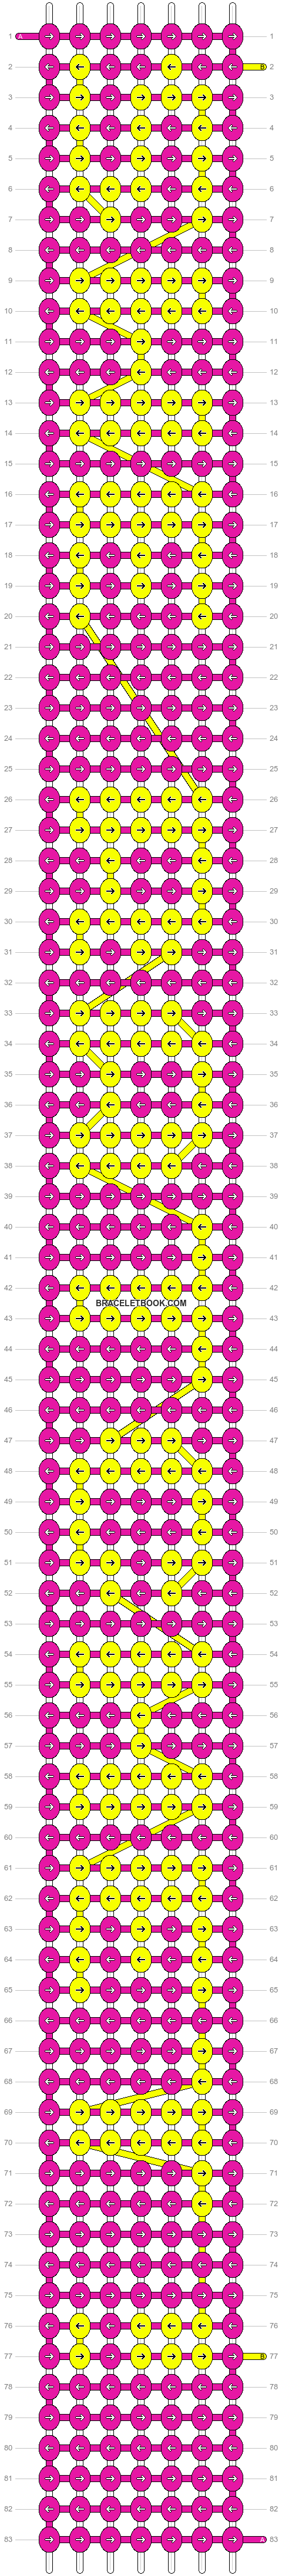 Alpha pattern #4812 pattern